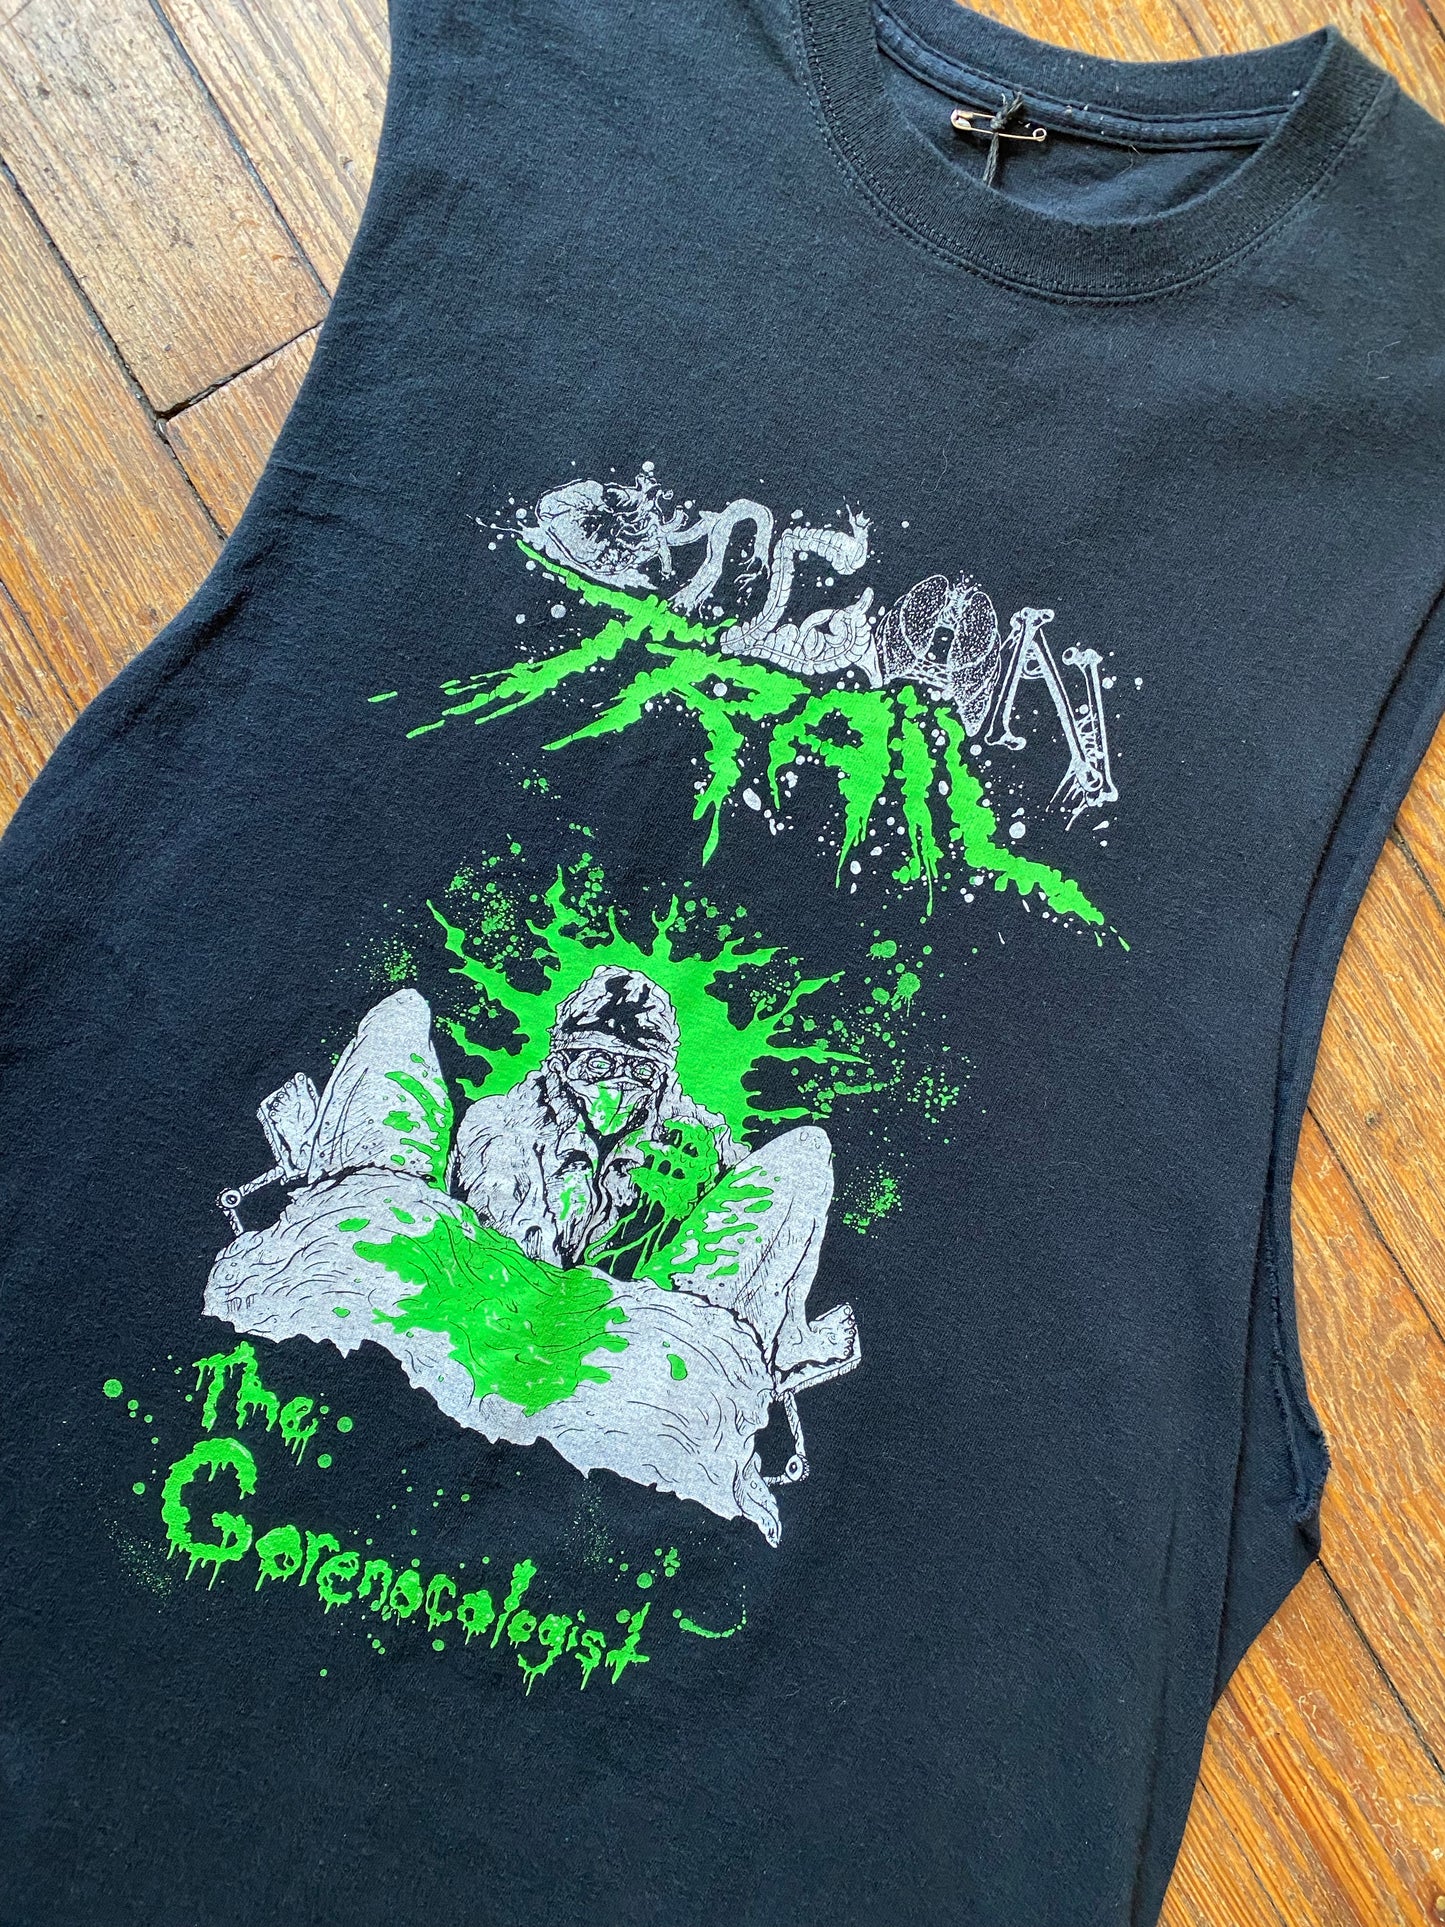 Organ Trail “The Gorenocologist” Sleeveless T-Shirt